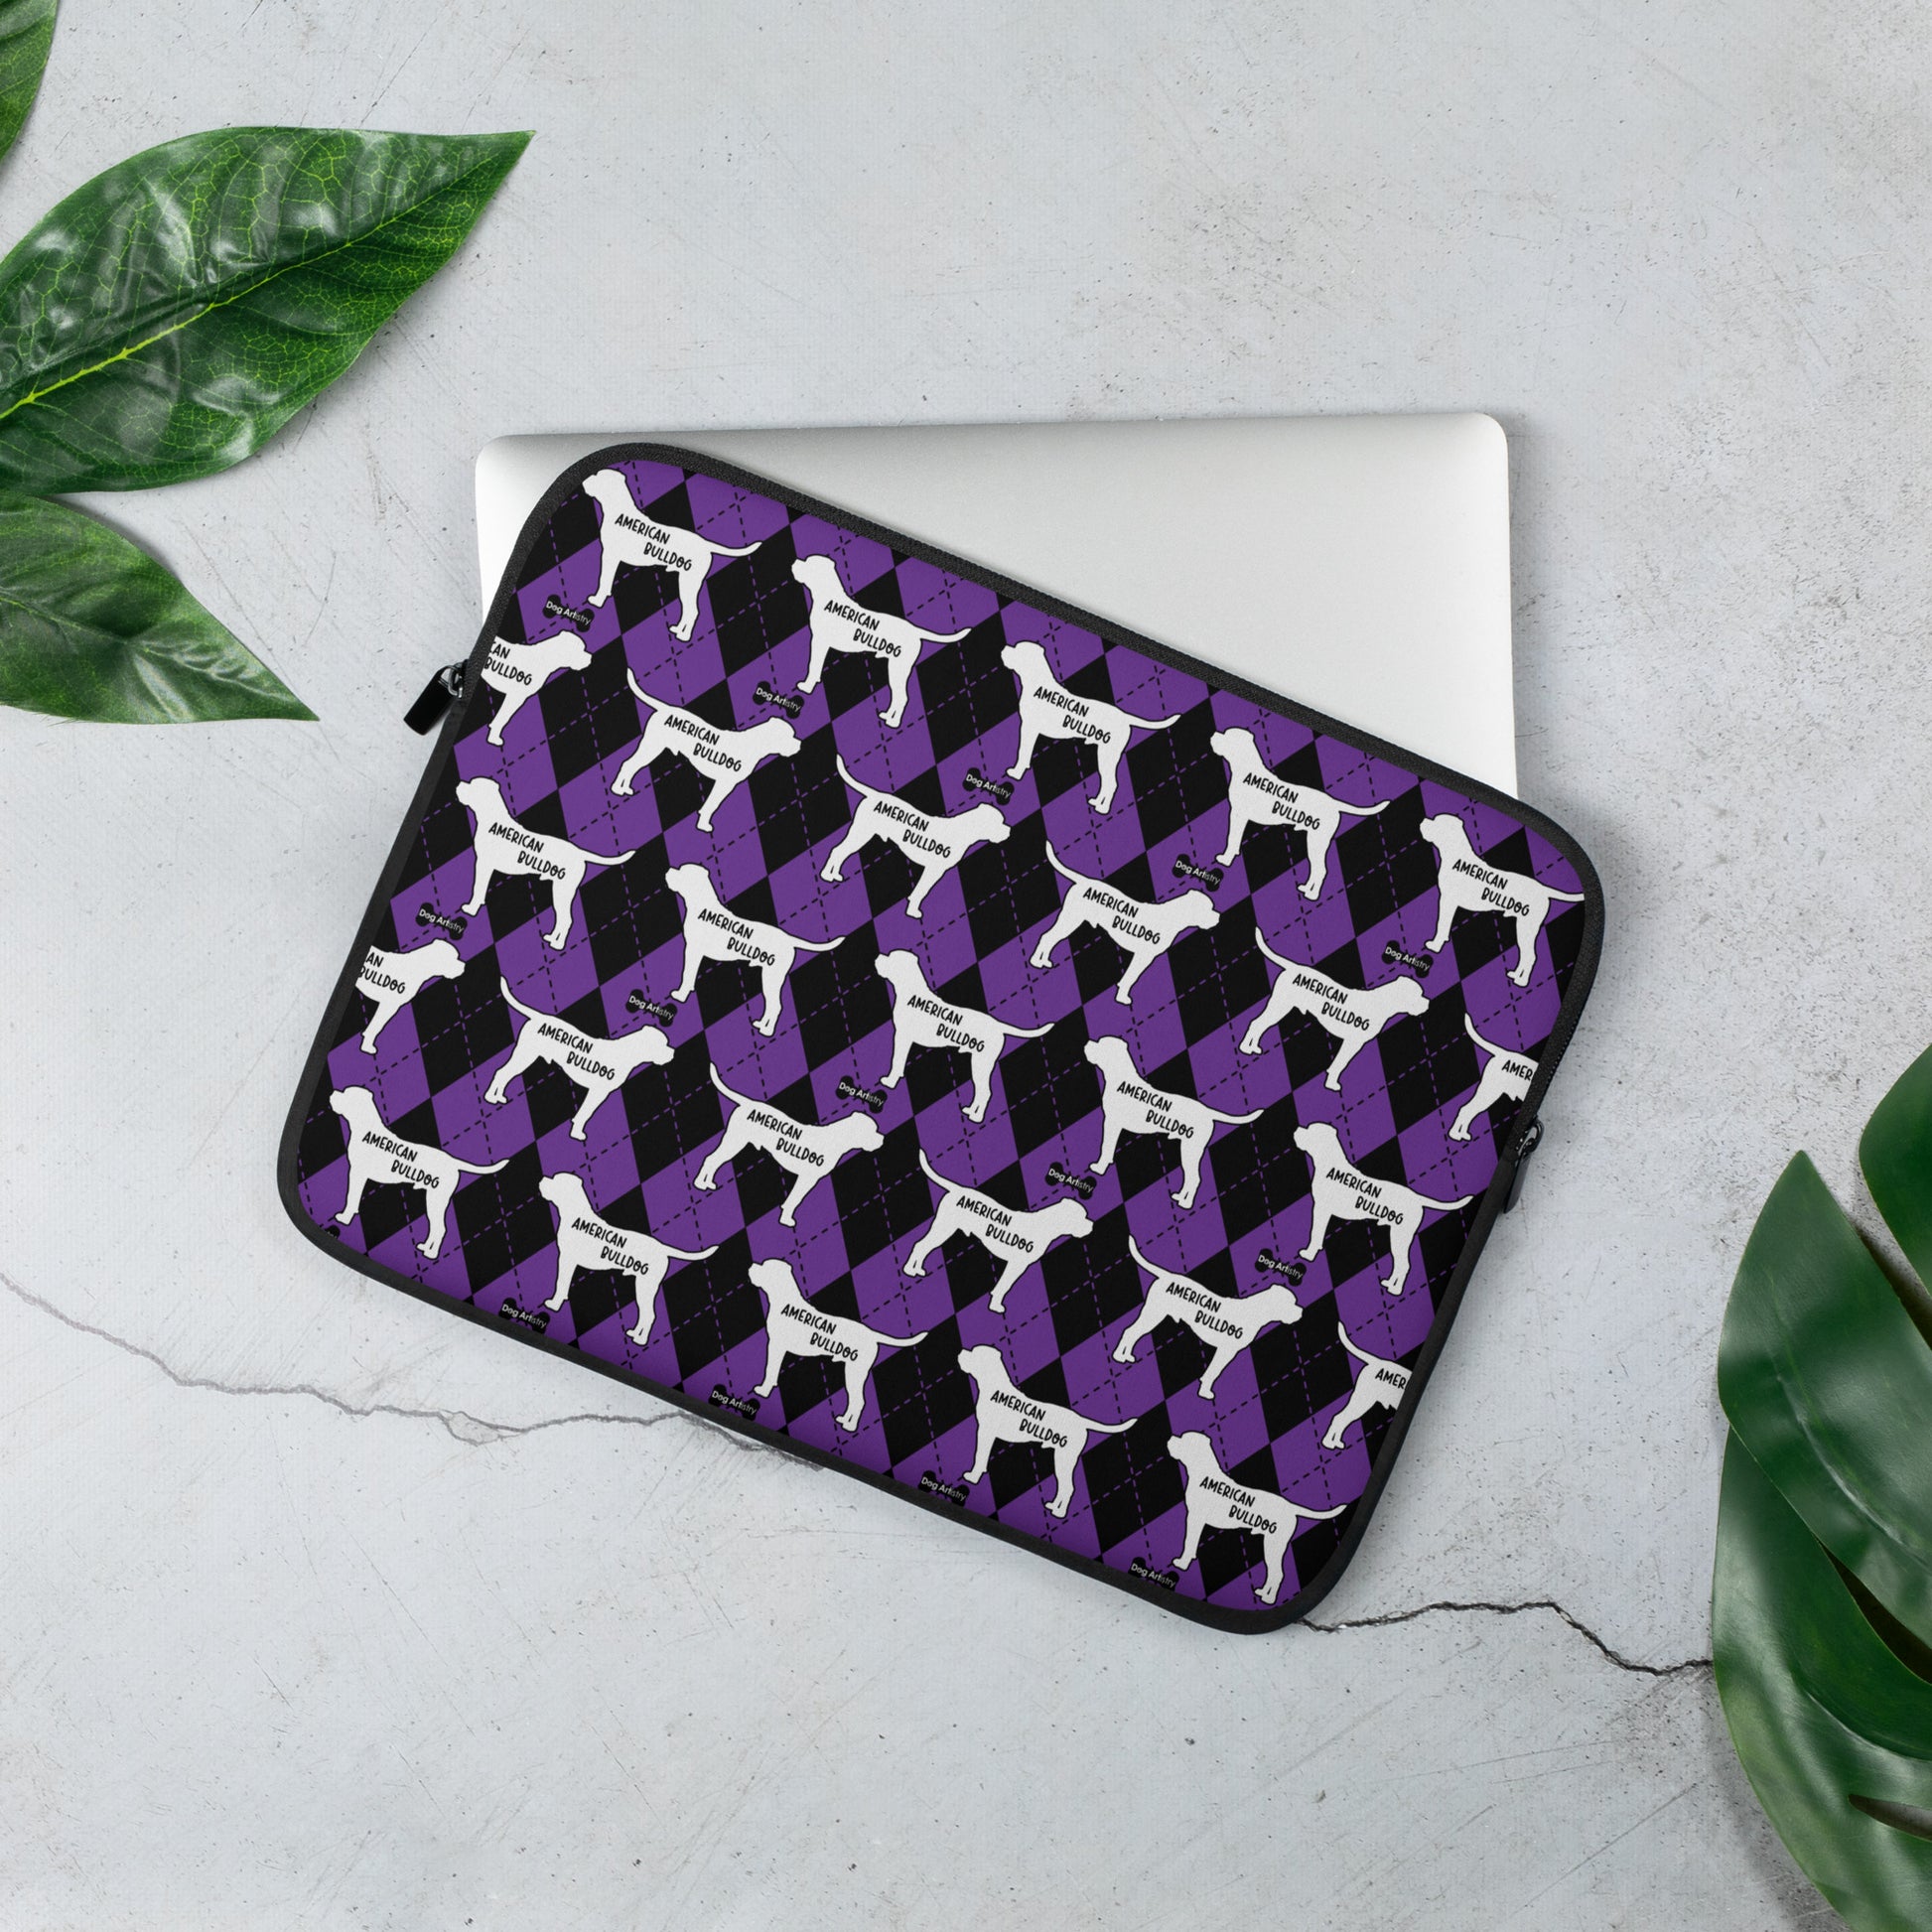 American Bulldog purple and black argyle laptop sleeve by Dog Artistry